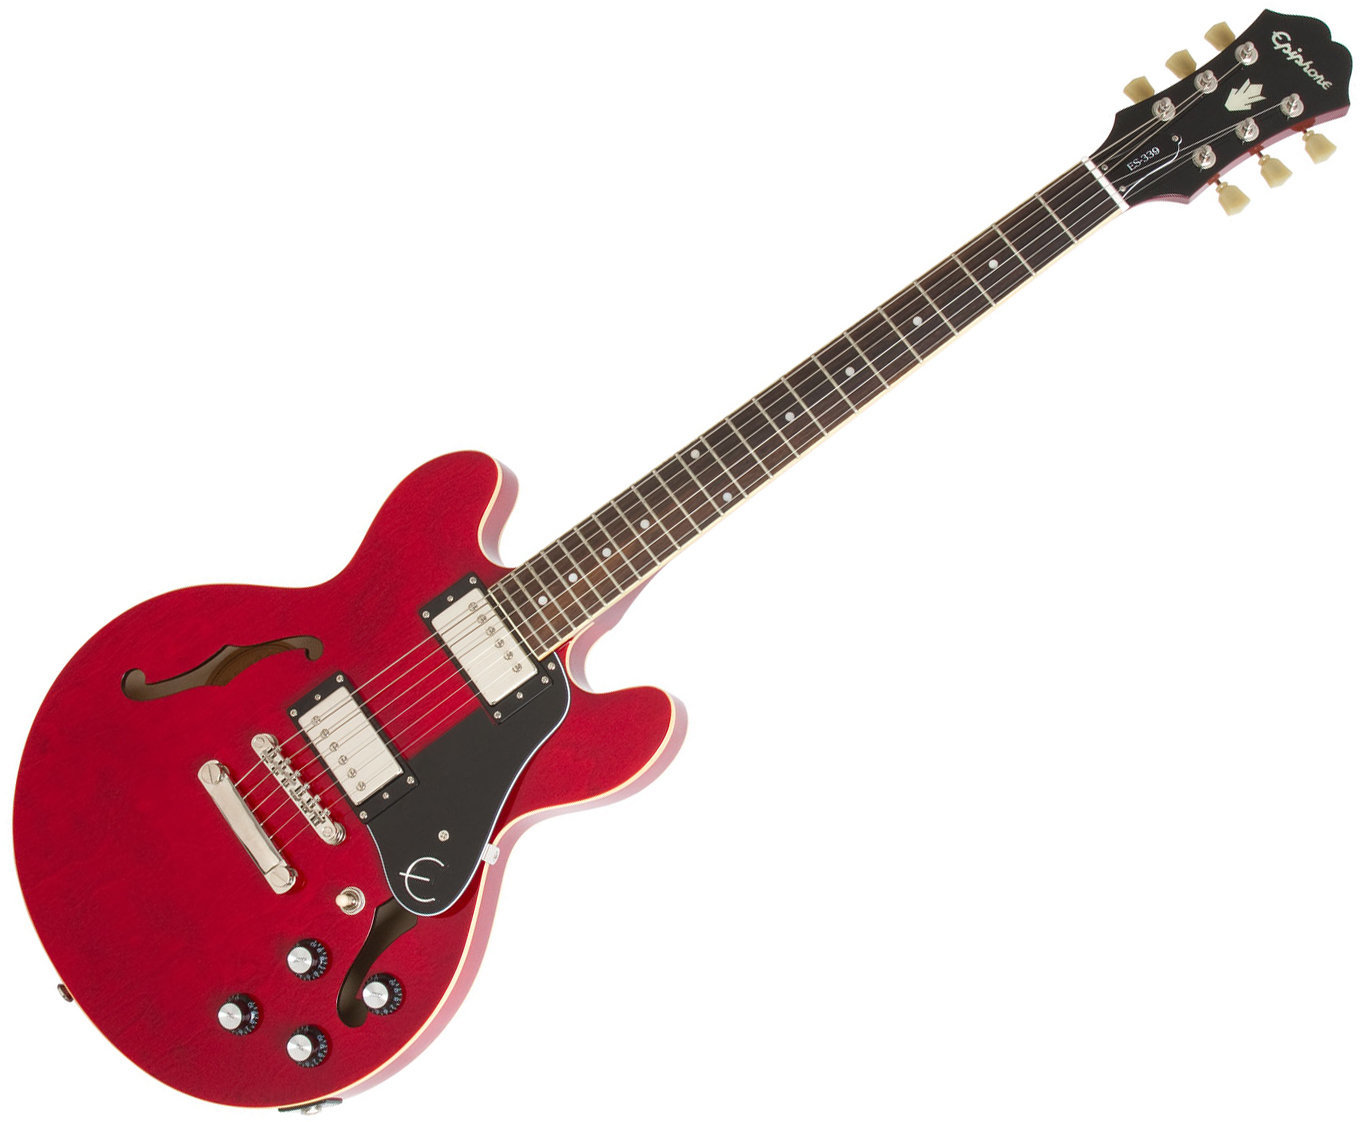 Semiakustická gitara Epiphone Ultra-339 Cherry